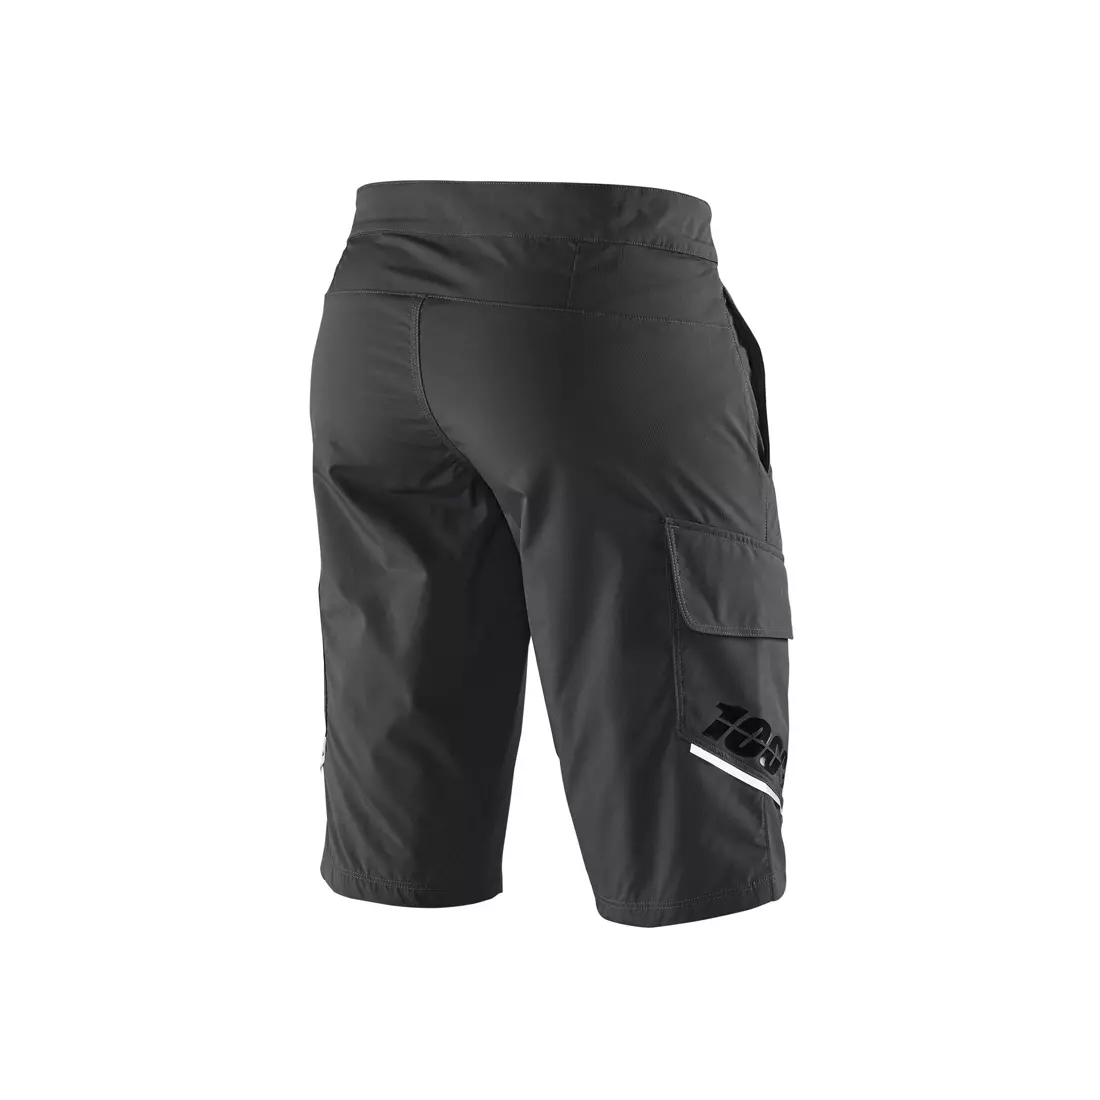 100% men's cycling shorts ridecamp charcoal STO-42401-052-30